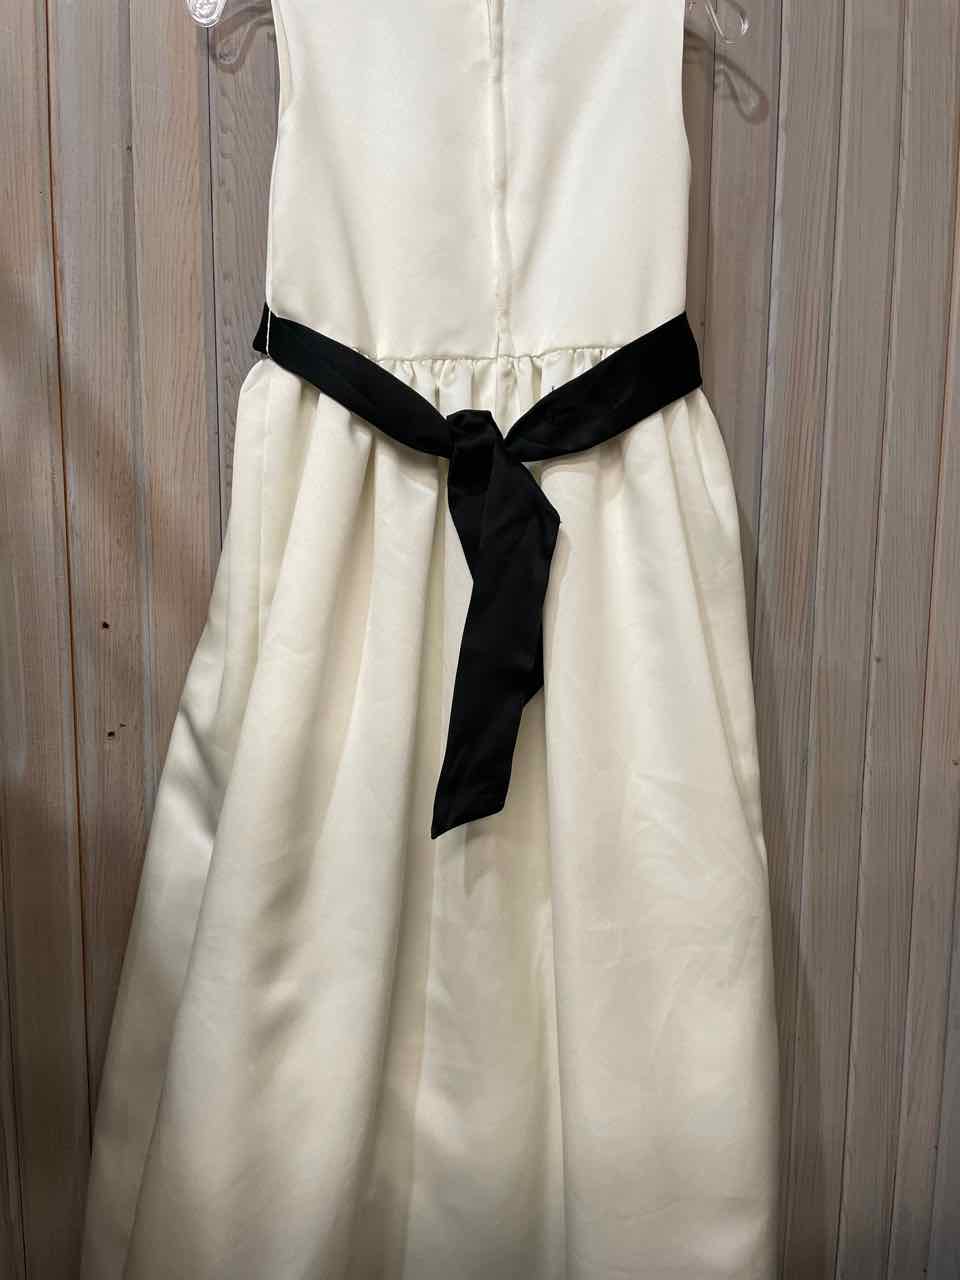 8 - ivory satin sleeveless dress w/ black sash